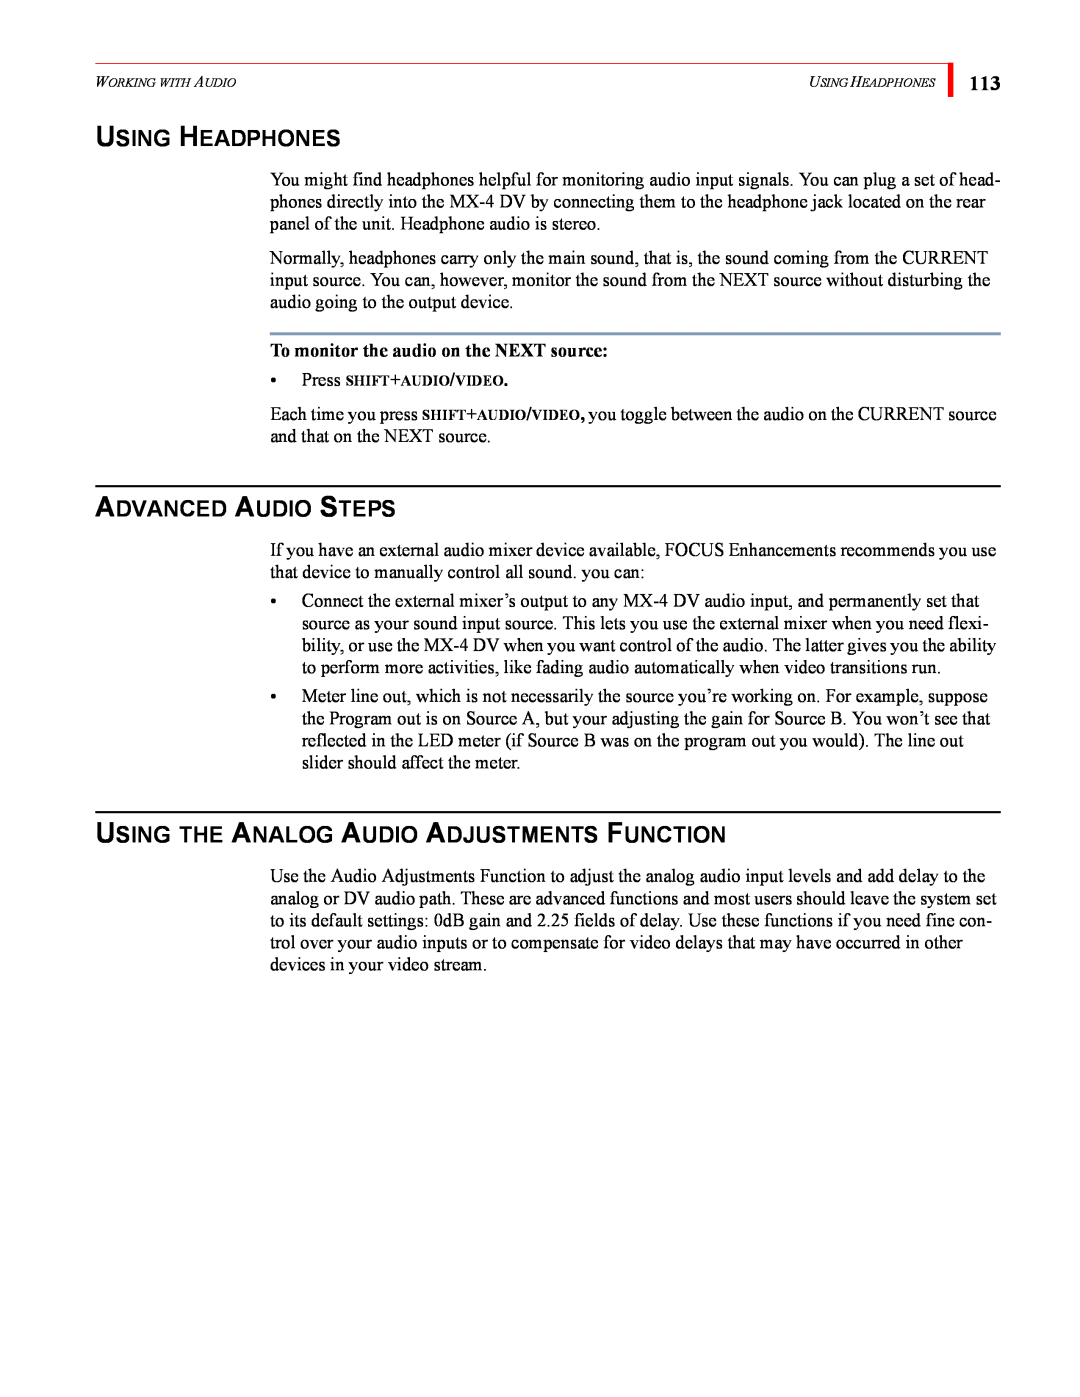 FOCUS Enhancements MX-4DV manual Using Headphones, Advanced Audio Steps, Using The Analog Audio Adjustments Function 